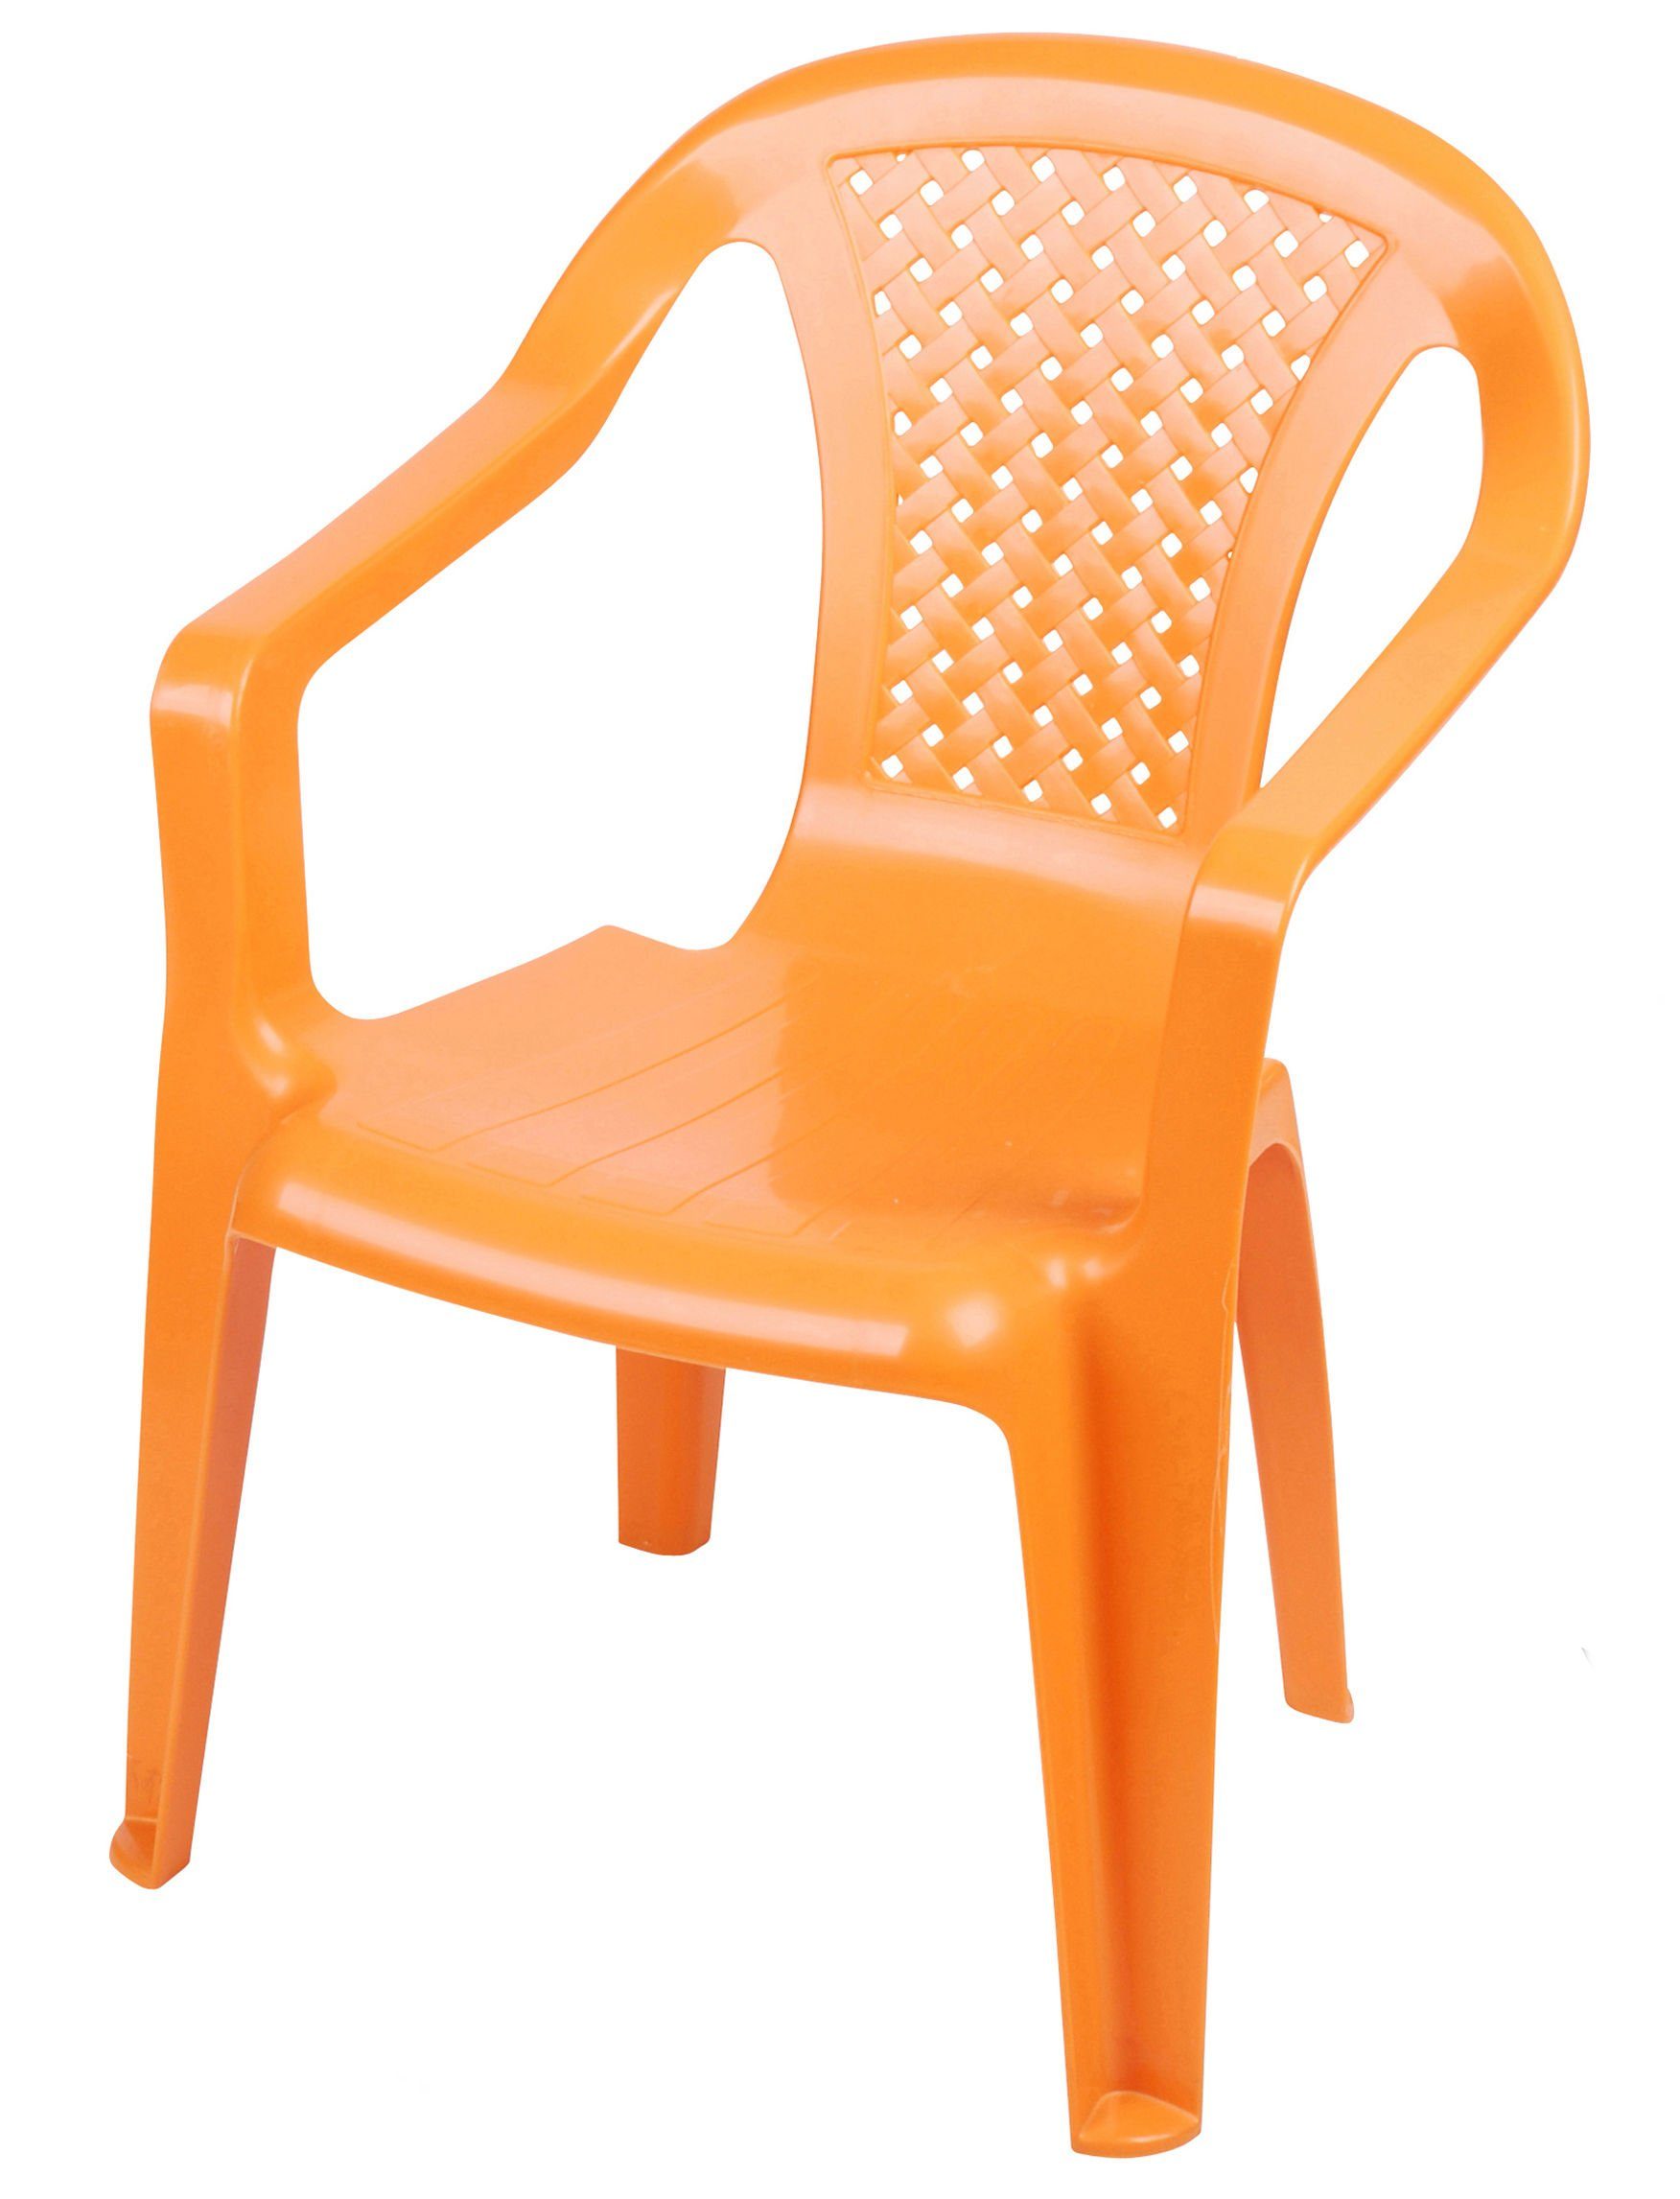 Spetebo Kinderstuhl Kinder Gartenstuhl aus Kunststoff - orange (einteilig, 1 St)